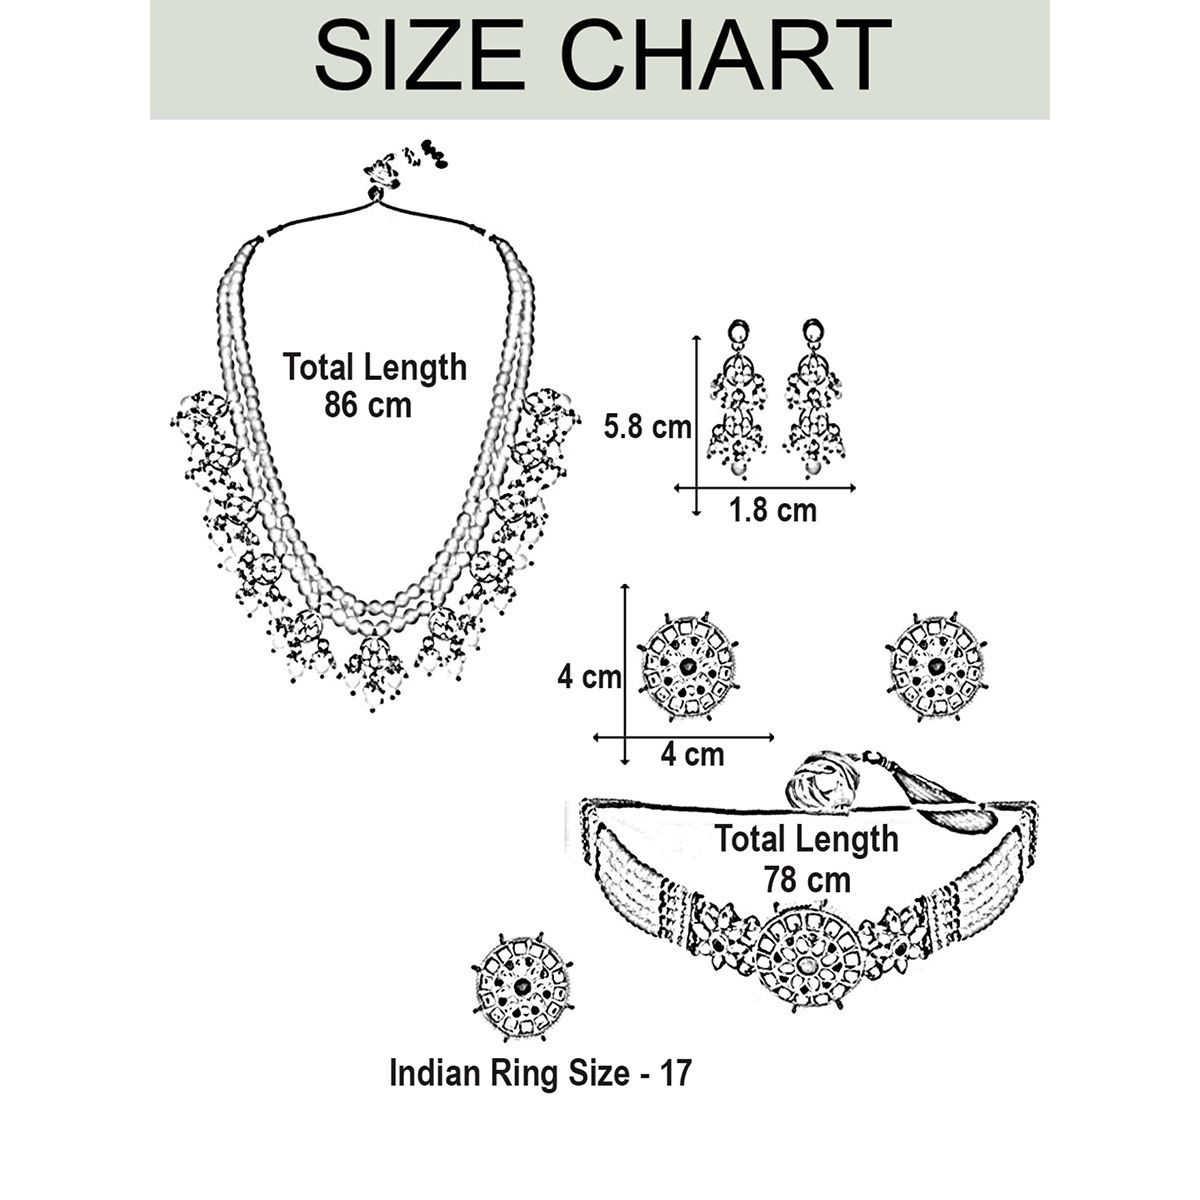 Share 150+ ring size measurement chart india latest - awesomeenglish.edu.vn